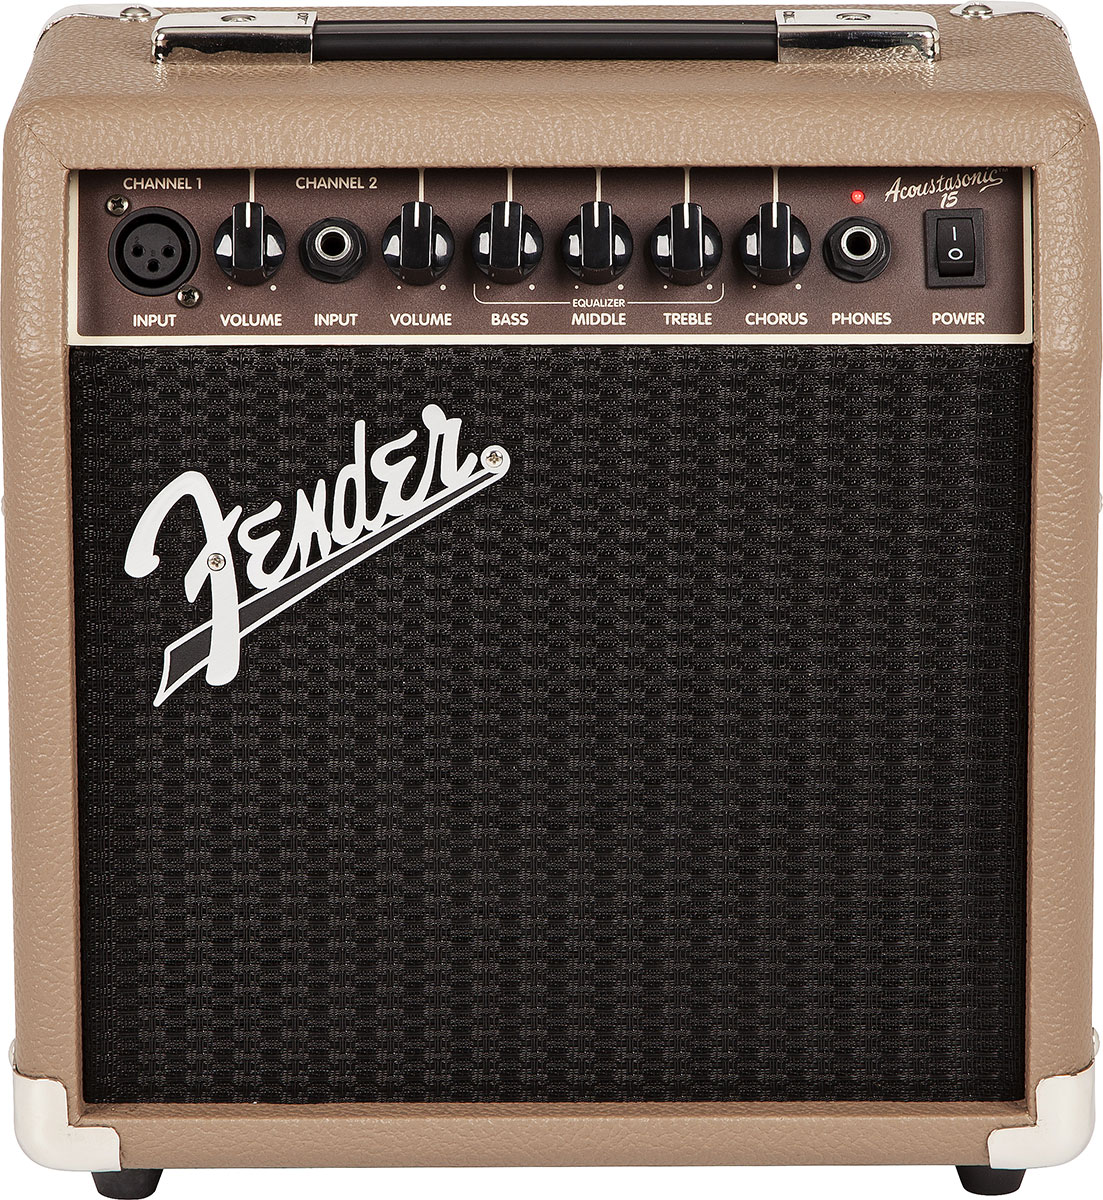 Fender Fender Acoustasonic 15 Acoustic Guitar Combo Amplifier (15 Watts)